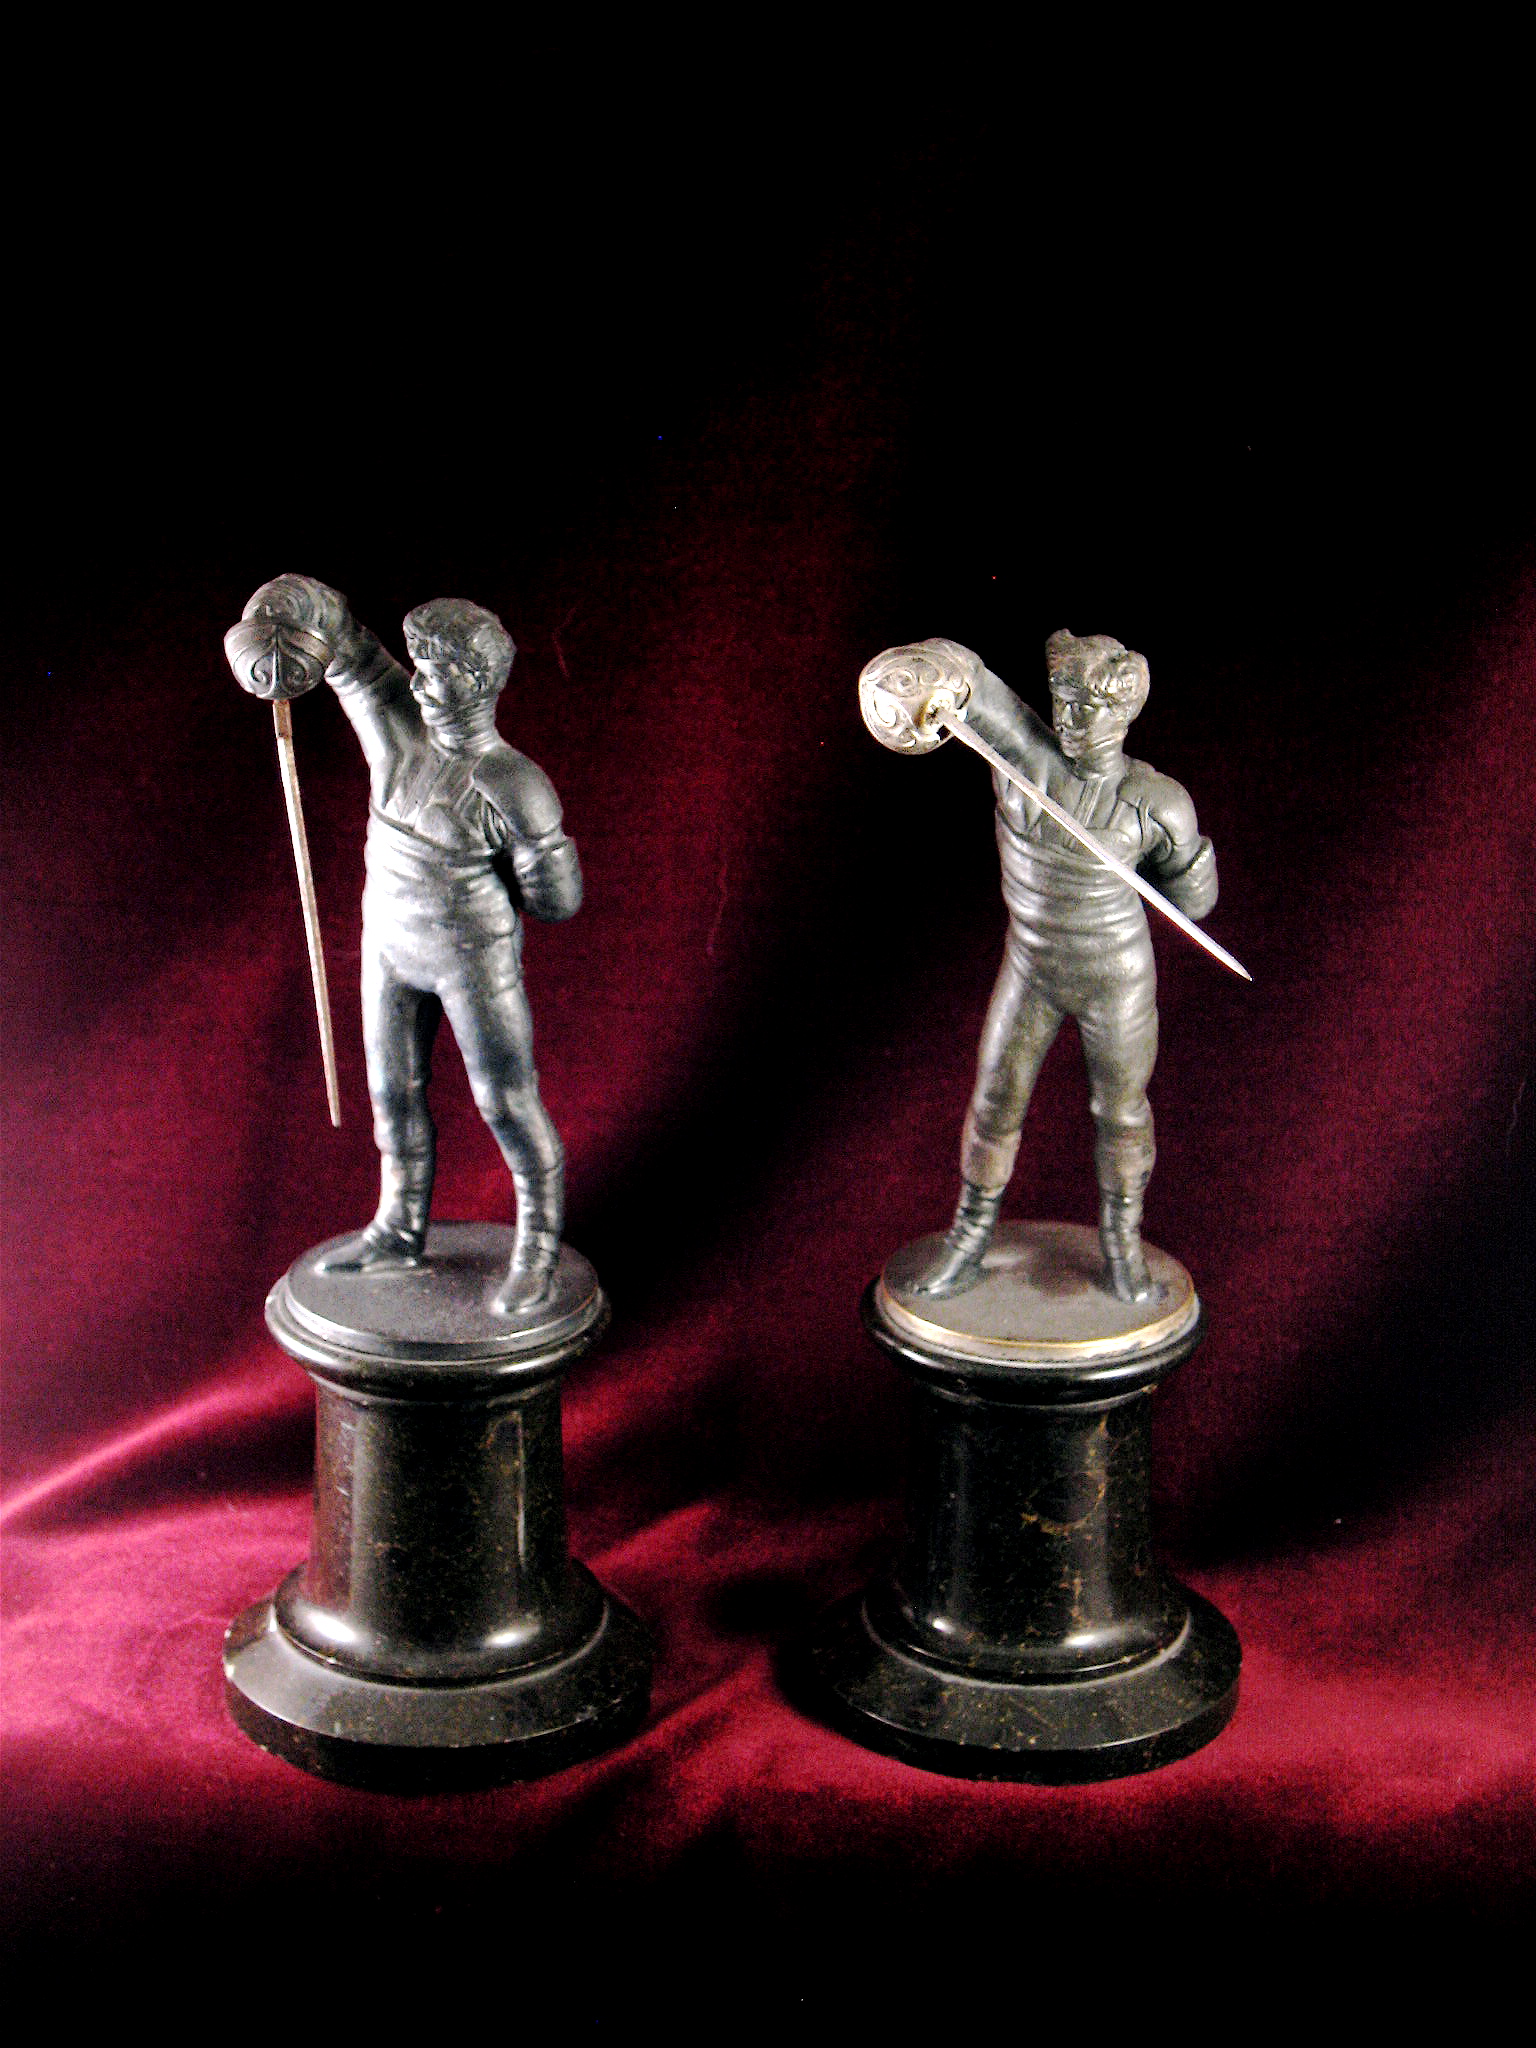 Statuettes of Mensur fencers